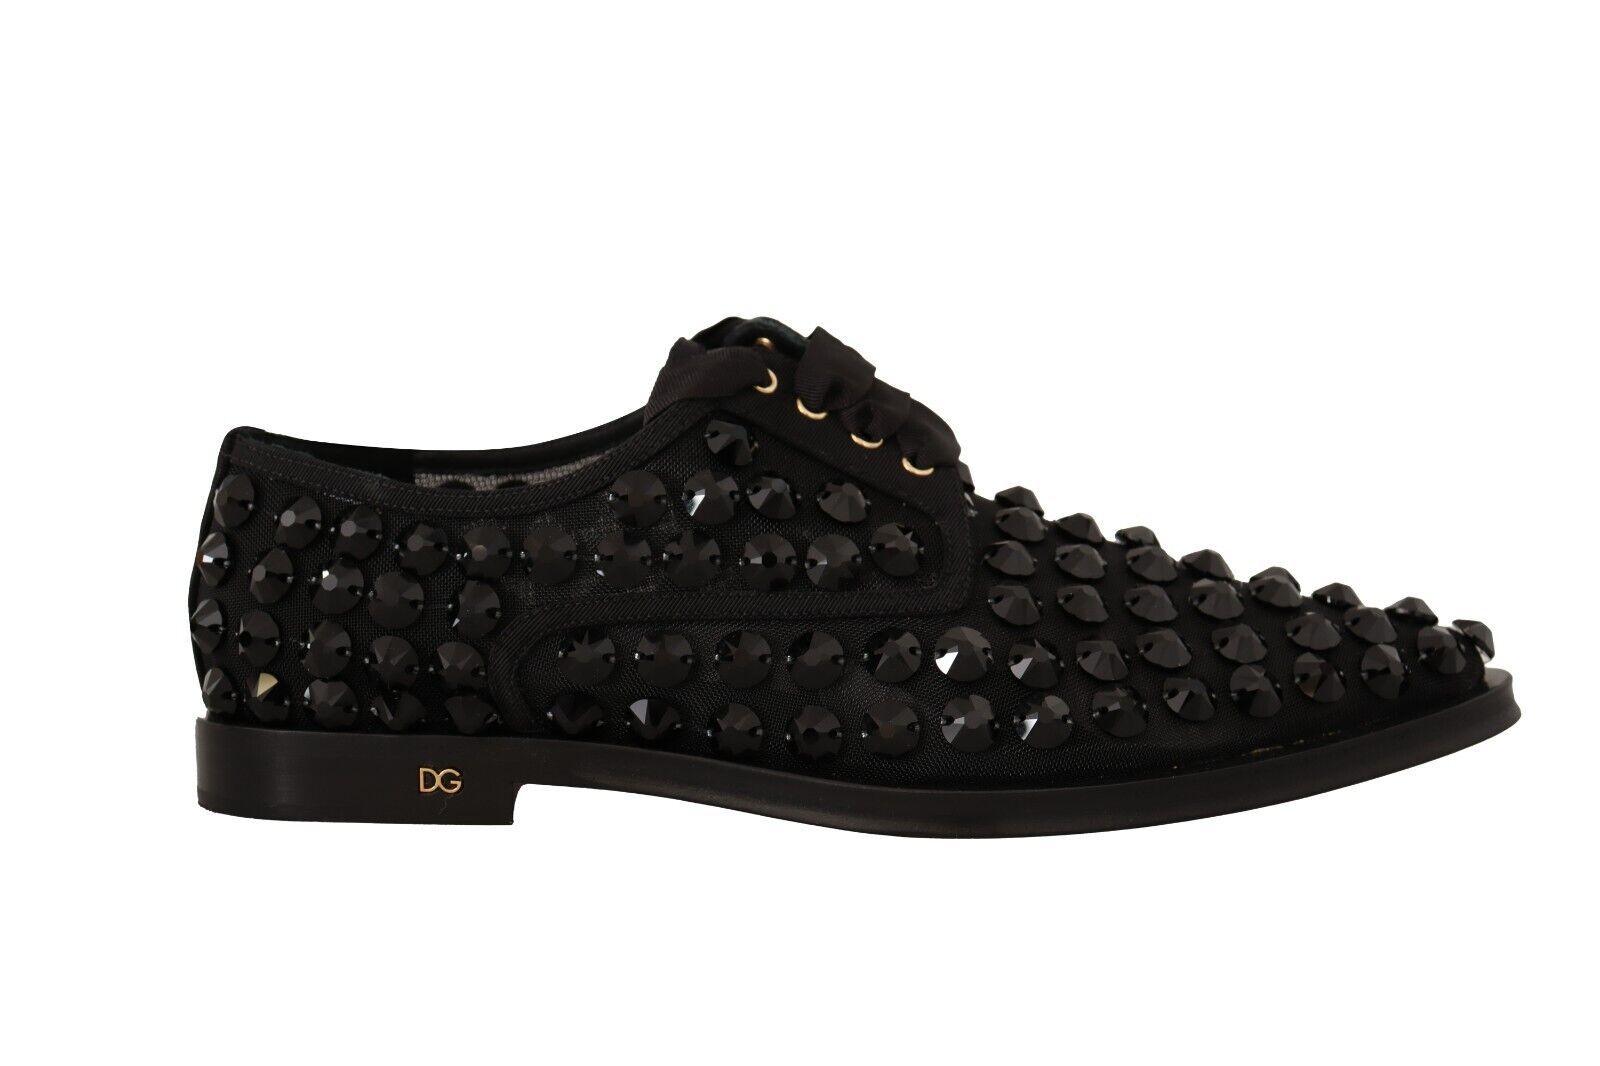 Black Dolce & Gabbana Black Lace Up Studded Formal Flats Shoes